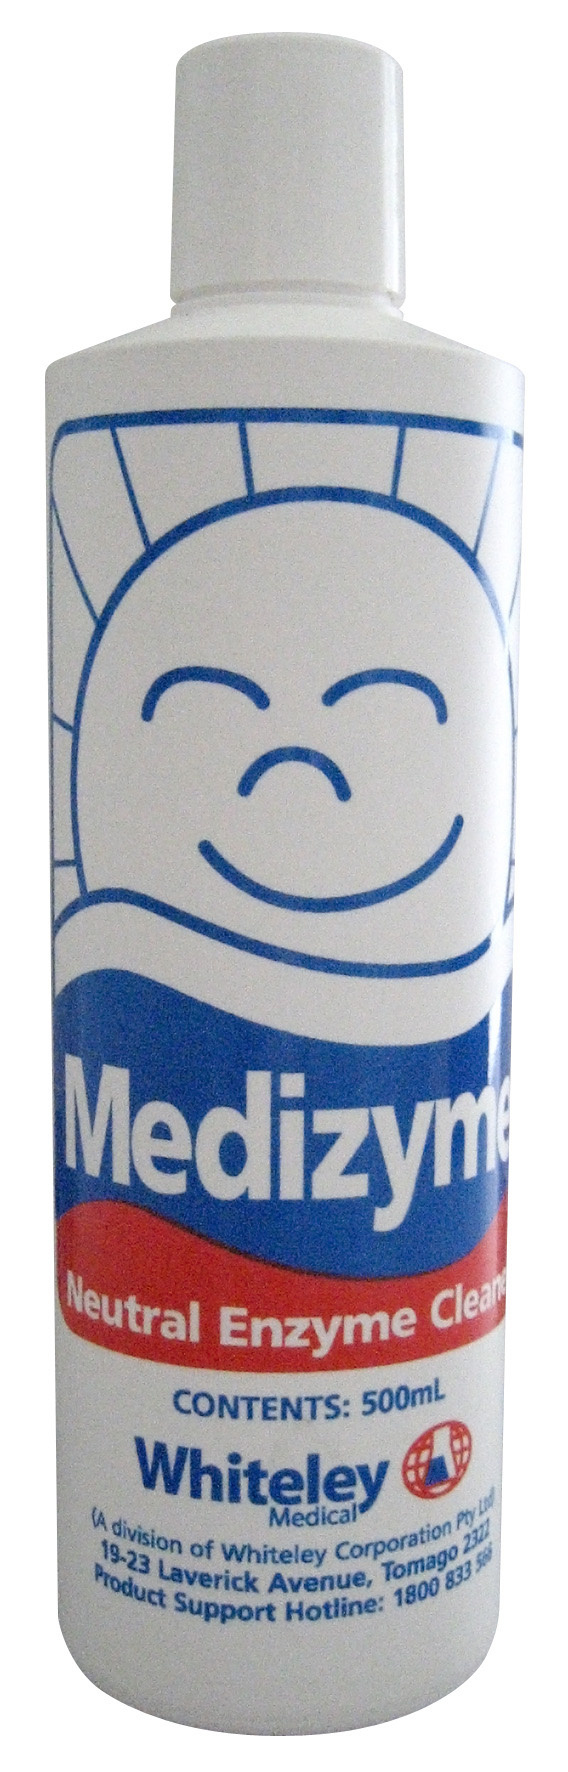 Whiteley Medizyme Enzyme Cleaner 500ml image 0